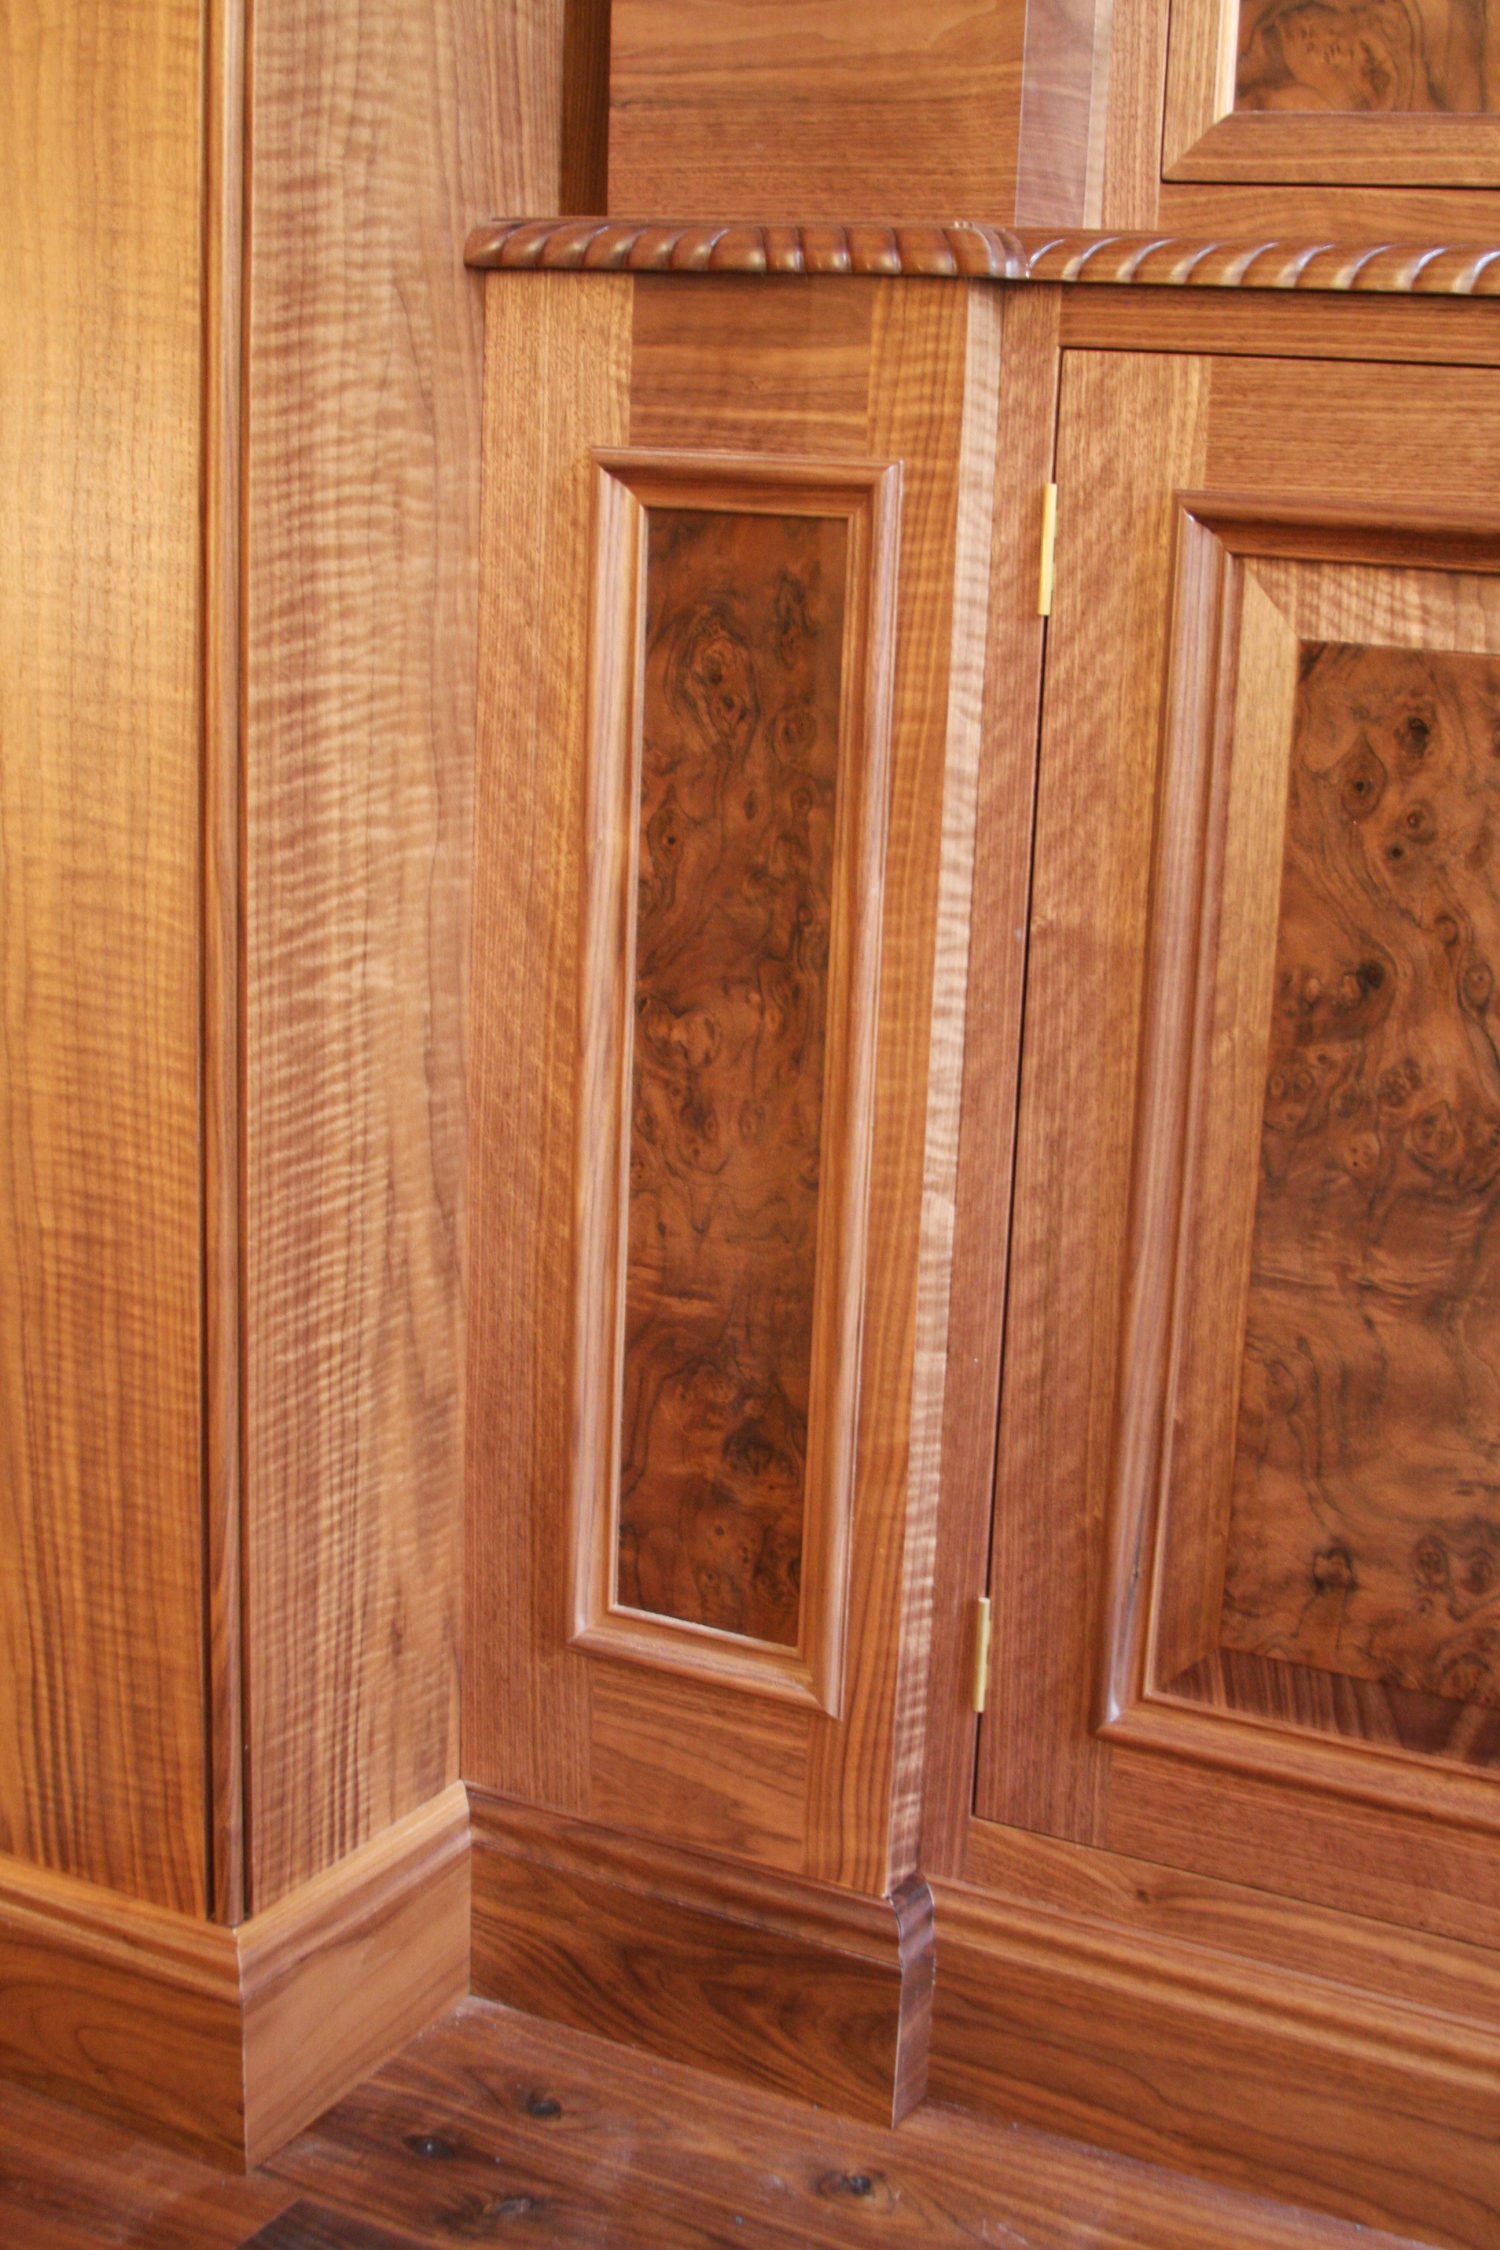 American Burr Walnut Panels on Pillars and Doors